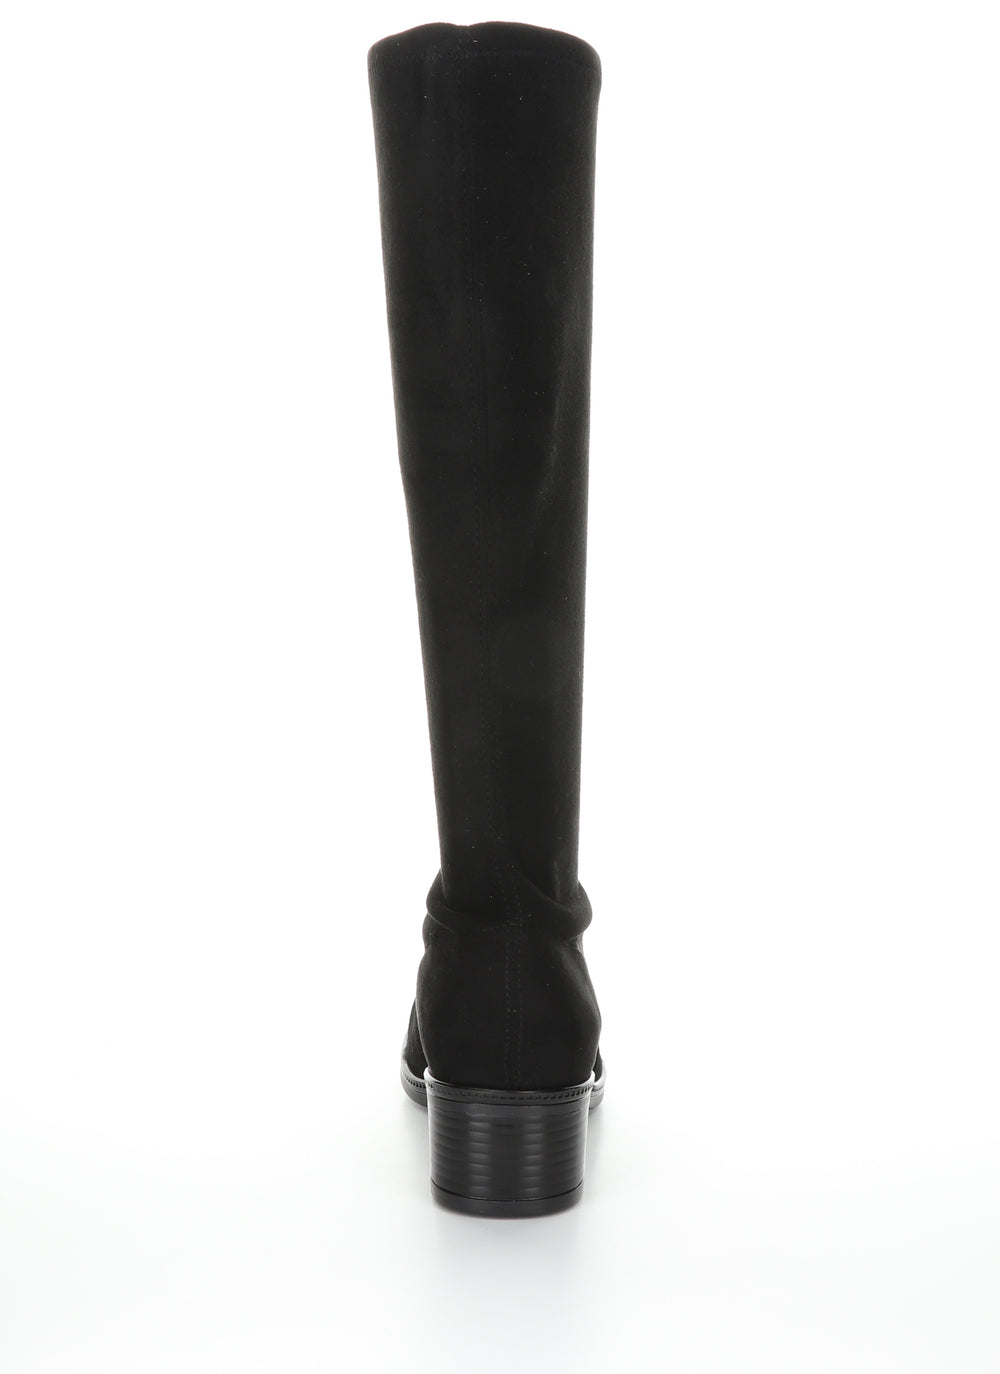 JAVA Black/Black Round Toe Boots|JAVA Bottes à Bout Rond in Noir